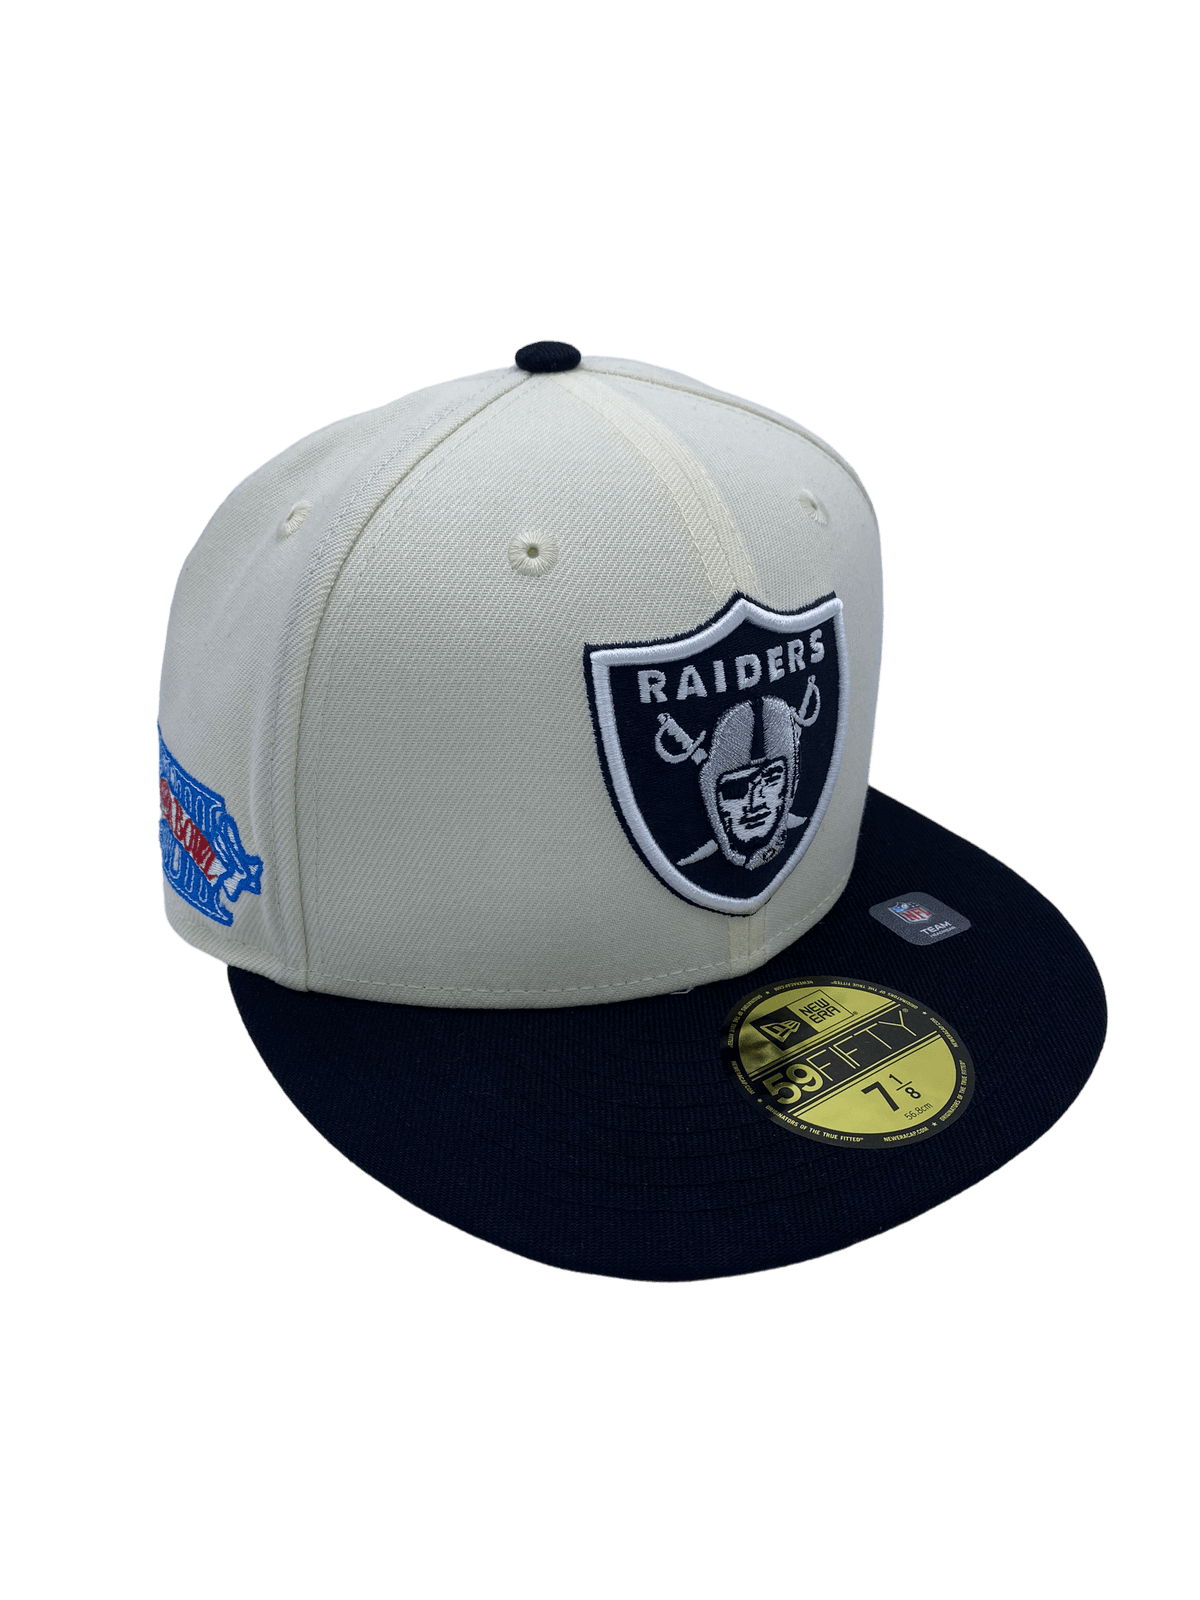 Men's New Era White/Gold Los Angeles Rams Retro Sport 9FIFTY Snapback Hat